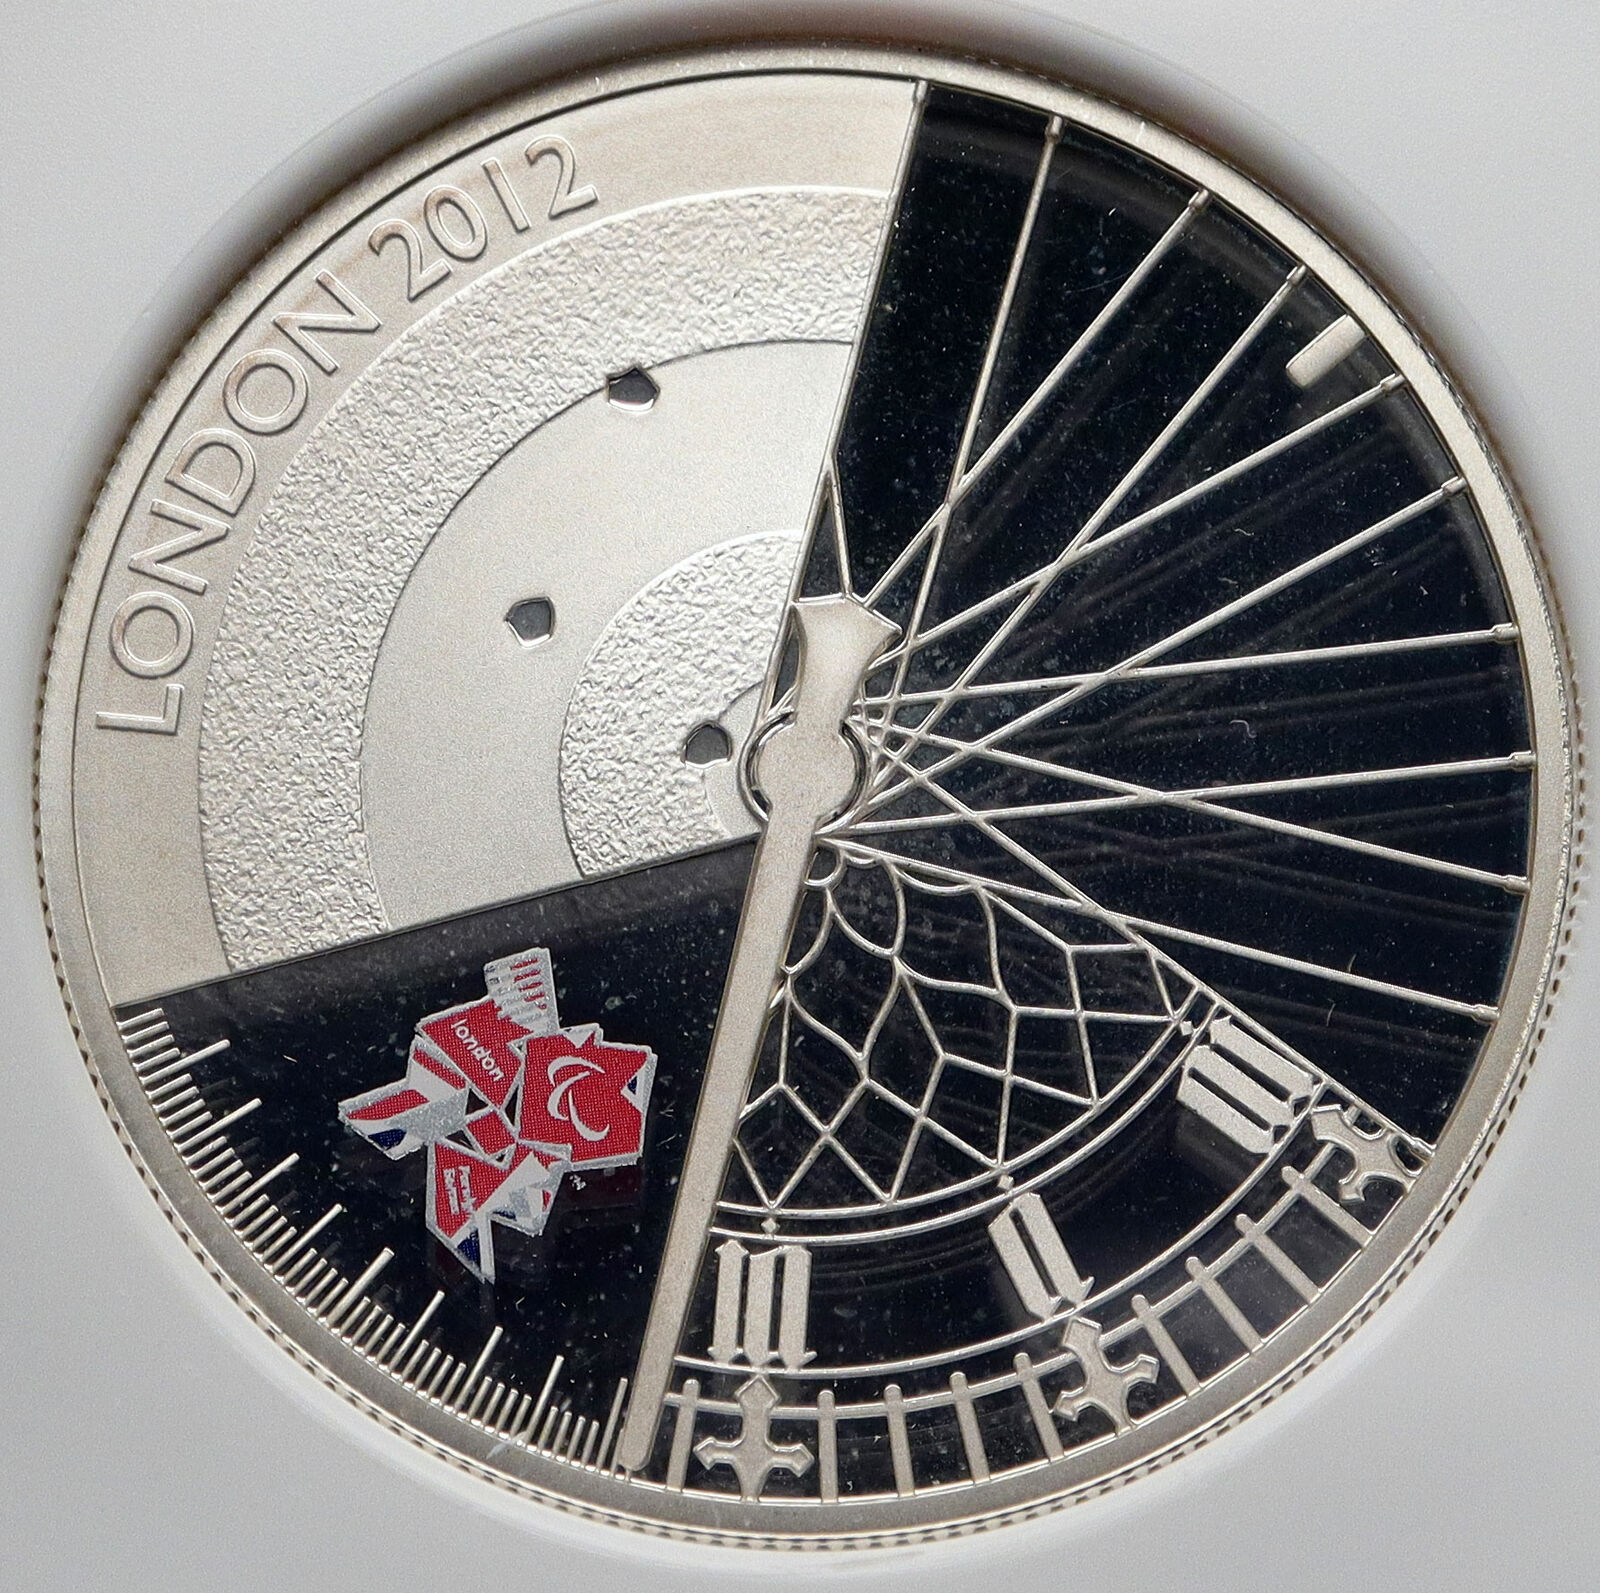 2012 UNITED KINGDOM Olympics Elizabeth II Piefort Proof SILVER Coin NGC i85380